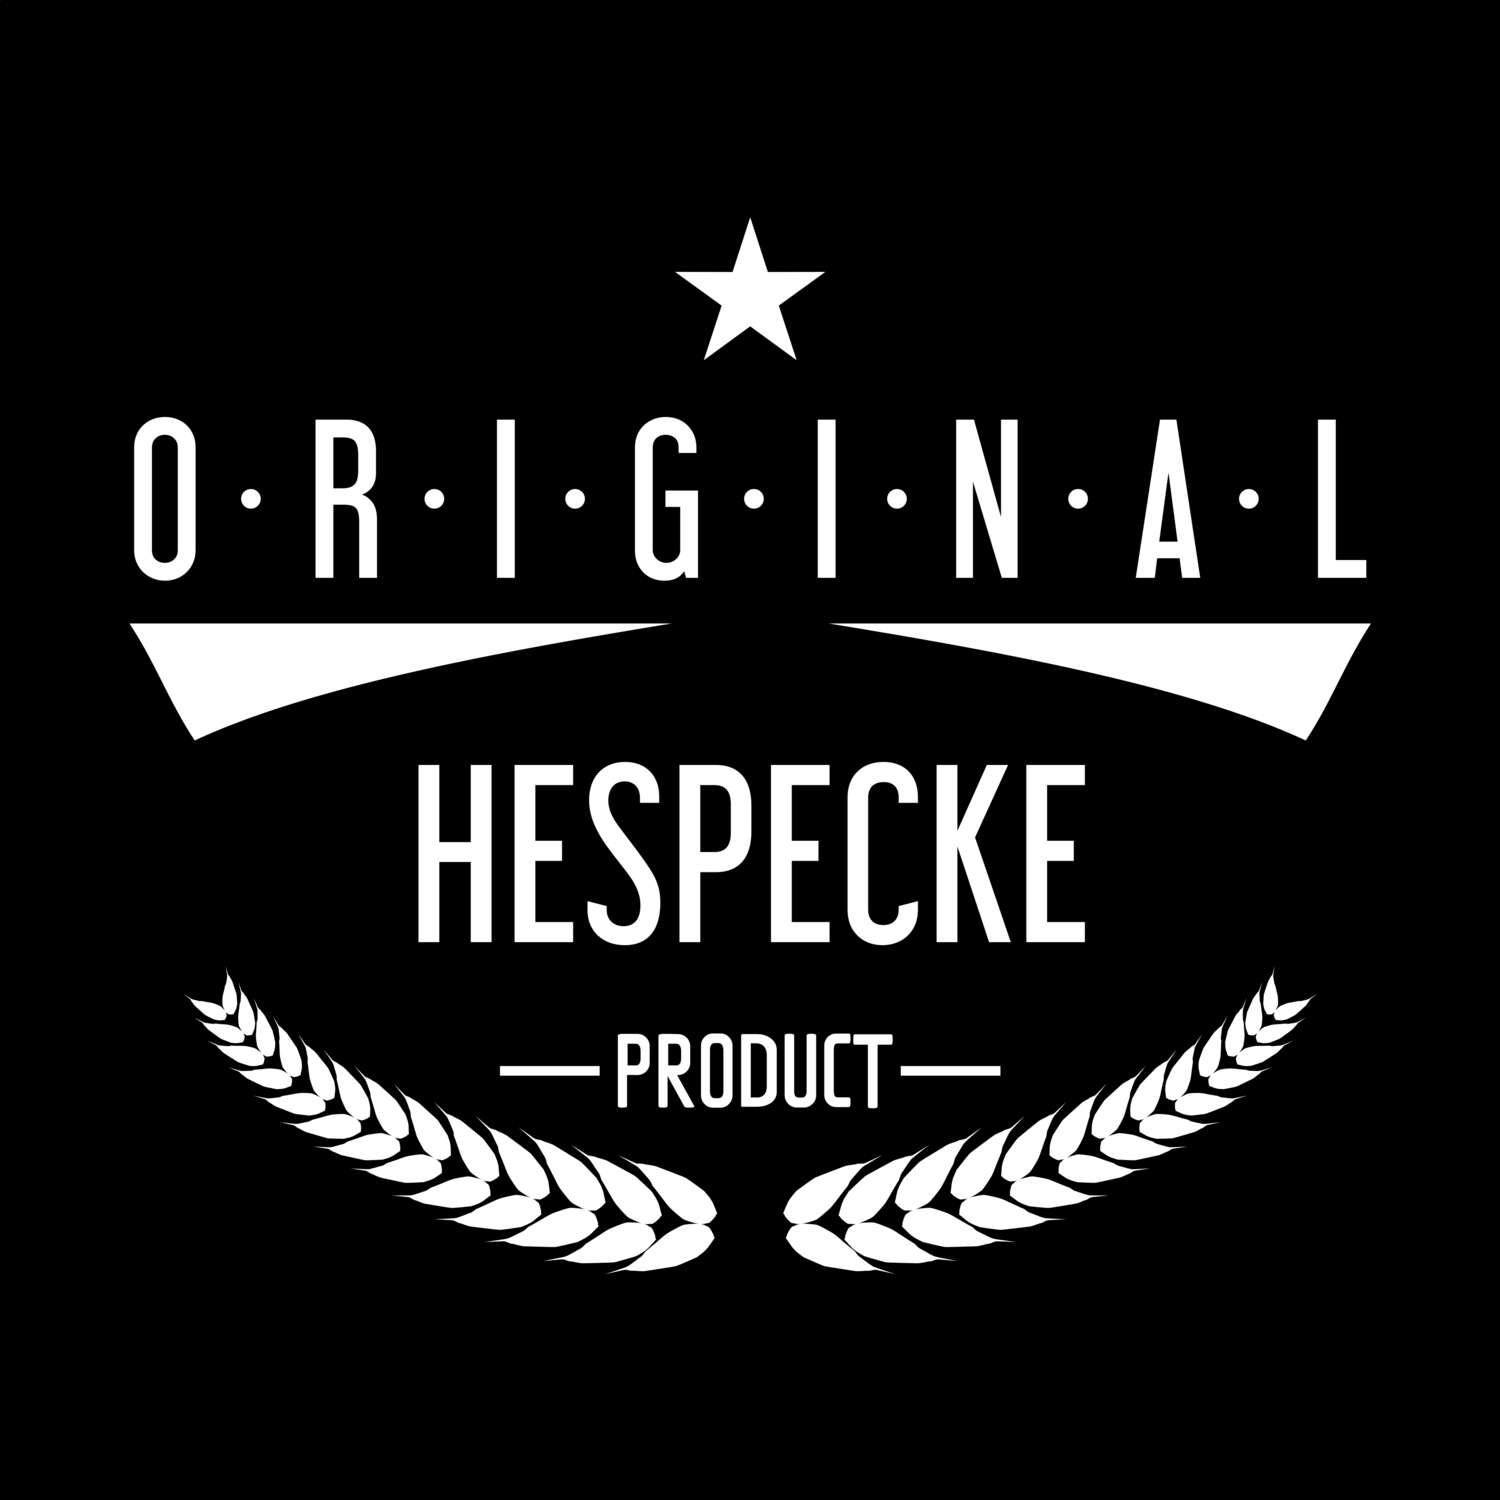 Hespecke T-Shirt »Original Product«